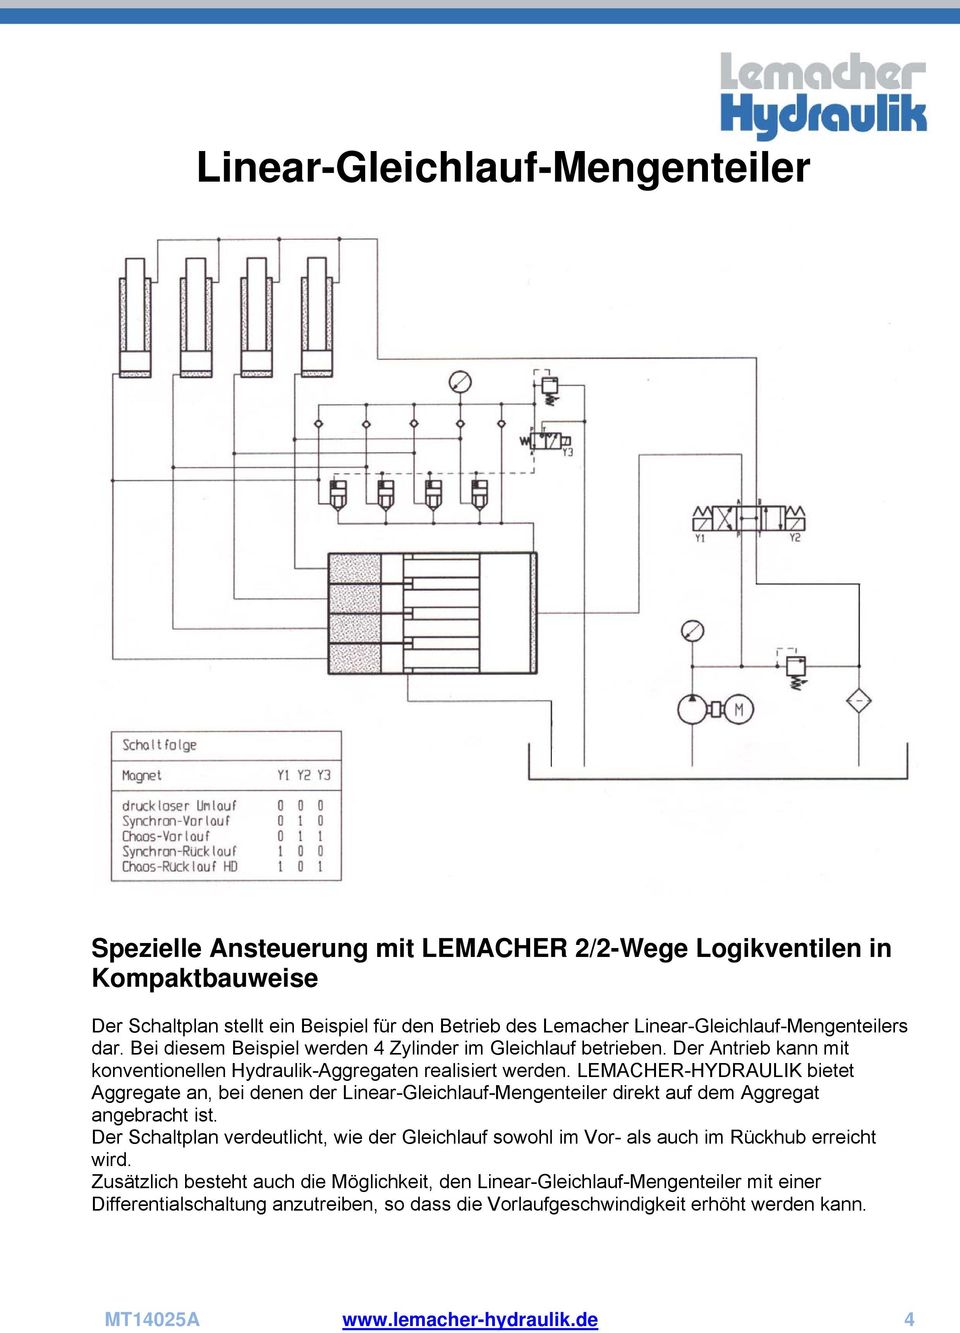 LEMACHER-HYDRAULIK bietet Aggregate an, bei denen der Linear-Gleichlauf-Mengenteiler direkt auf dem Aggregat angebracht ist.